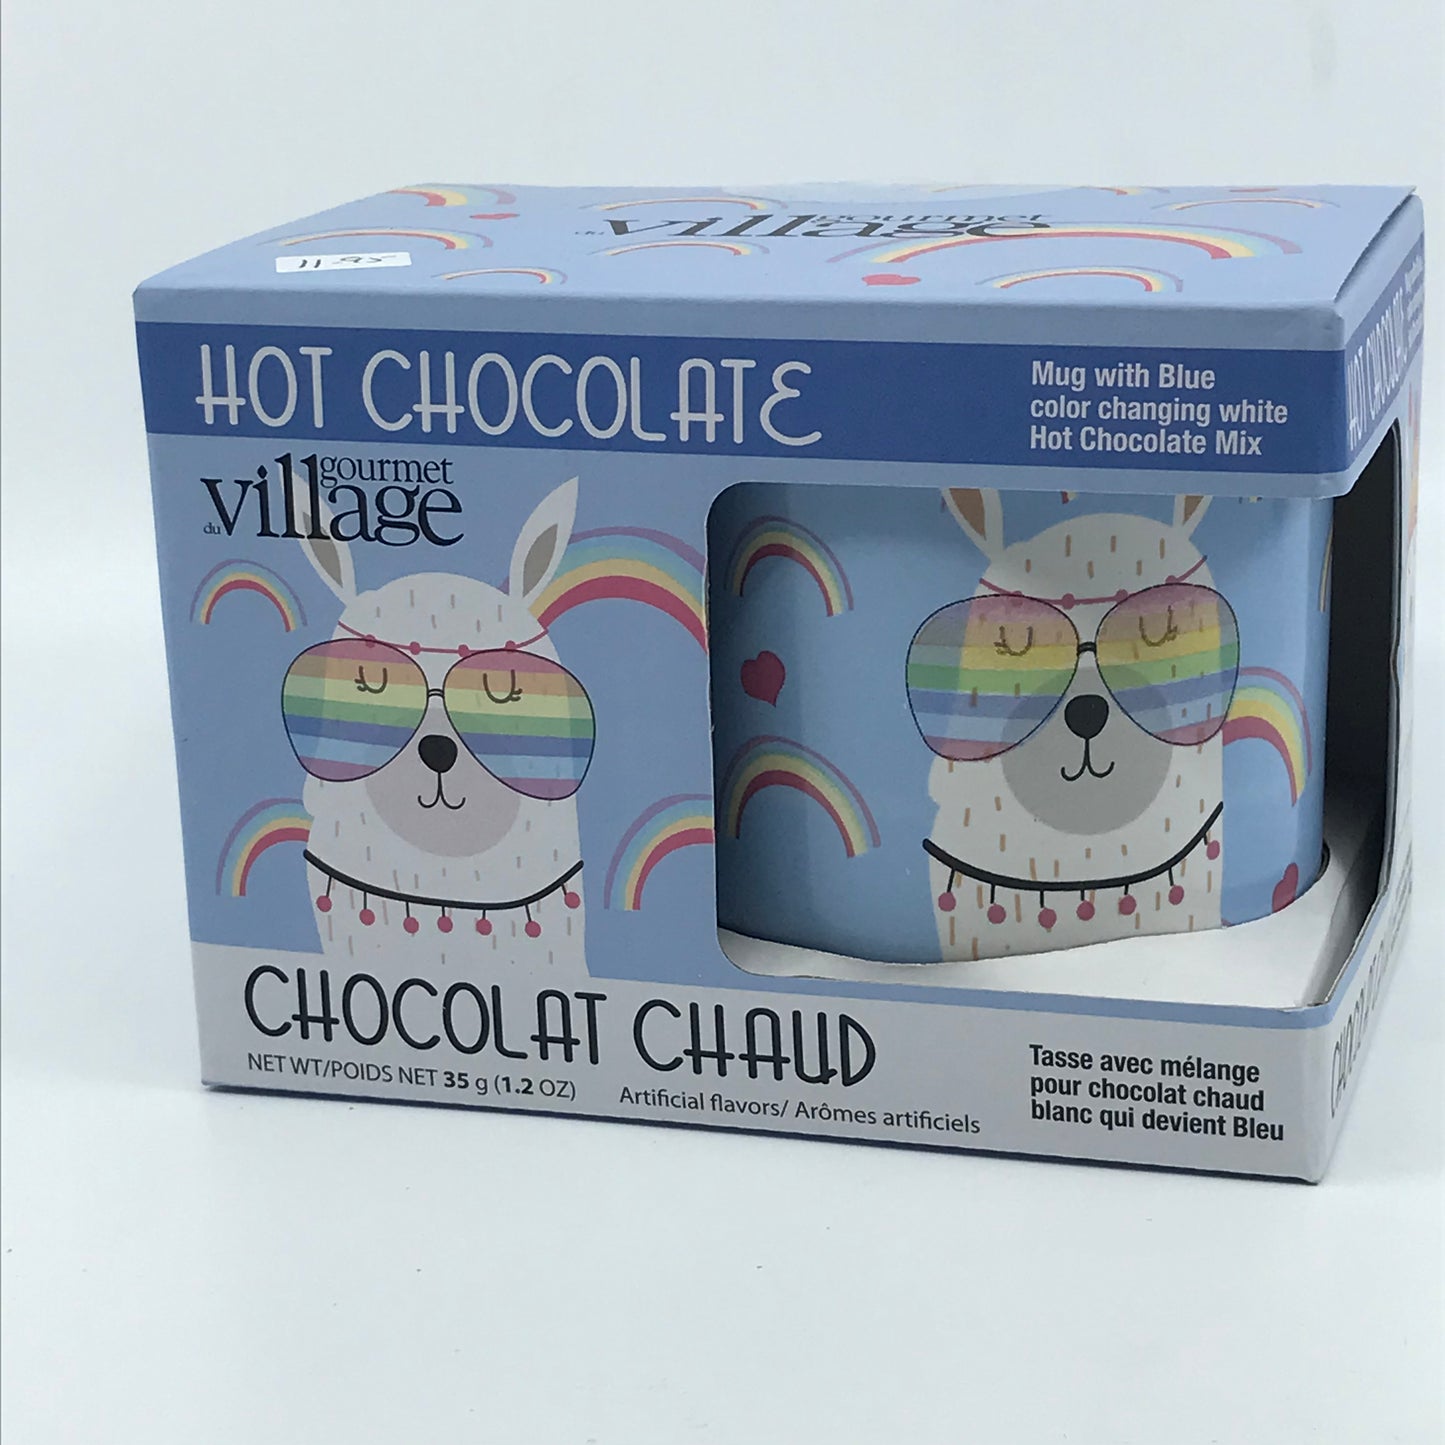 Hot Chocolate / Mug Combo